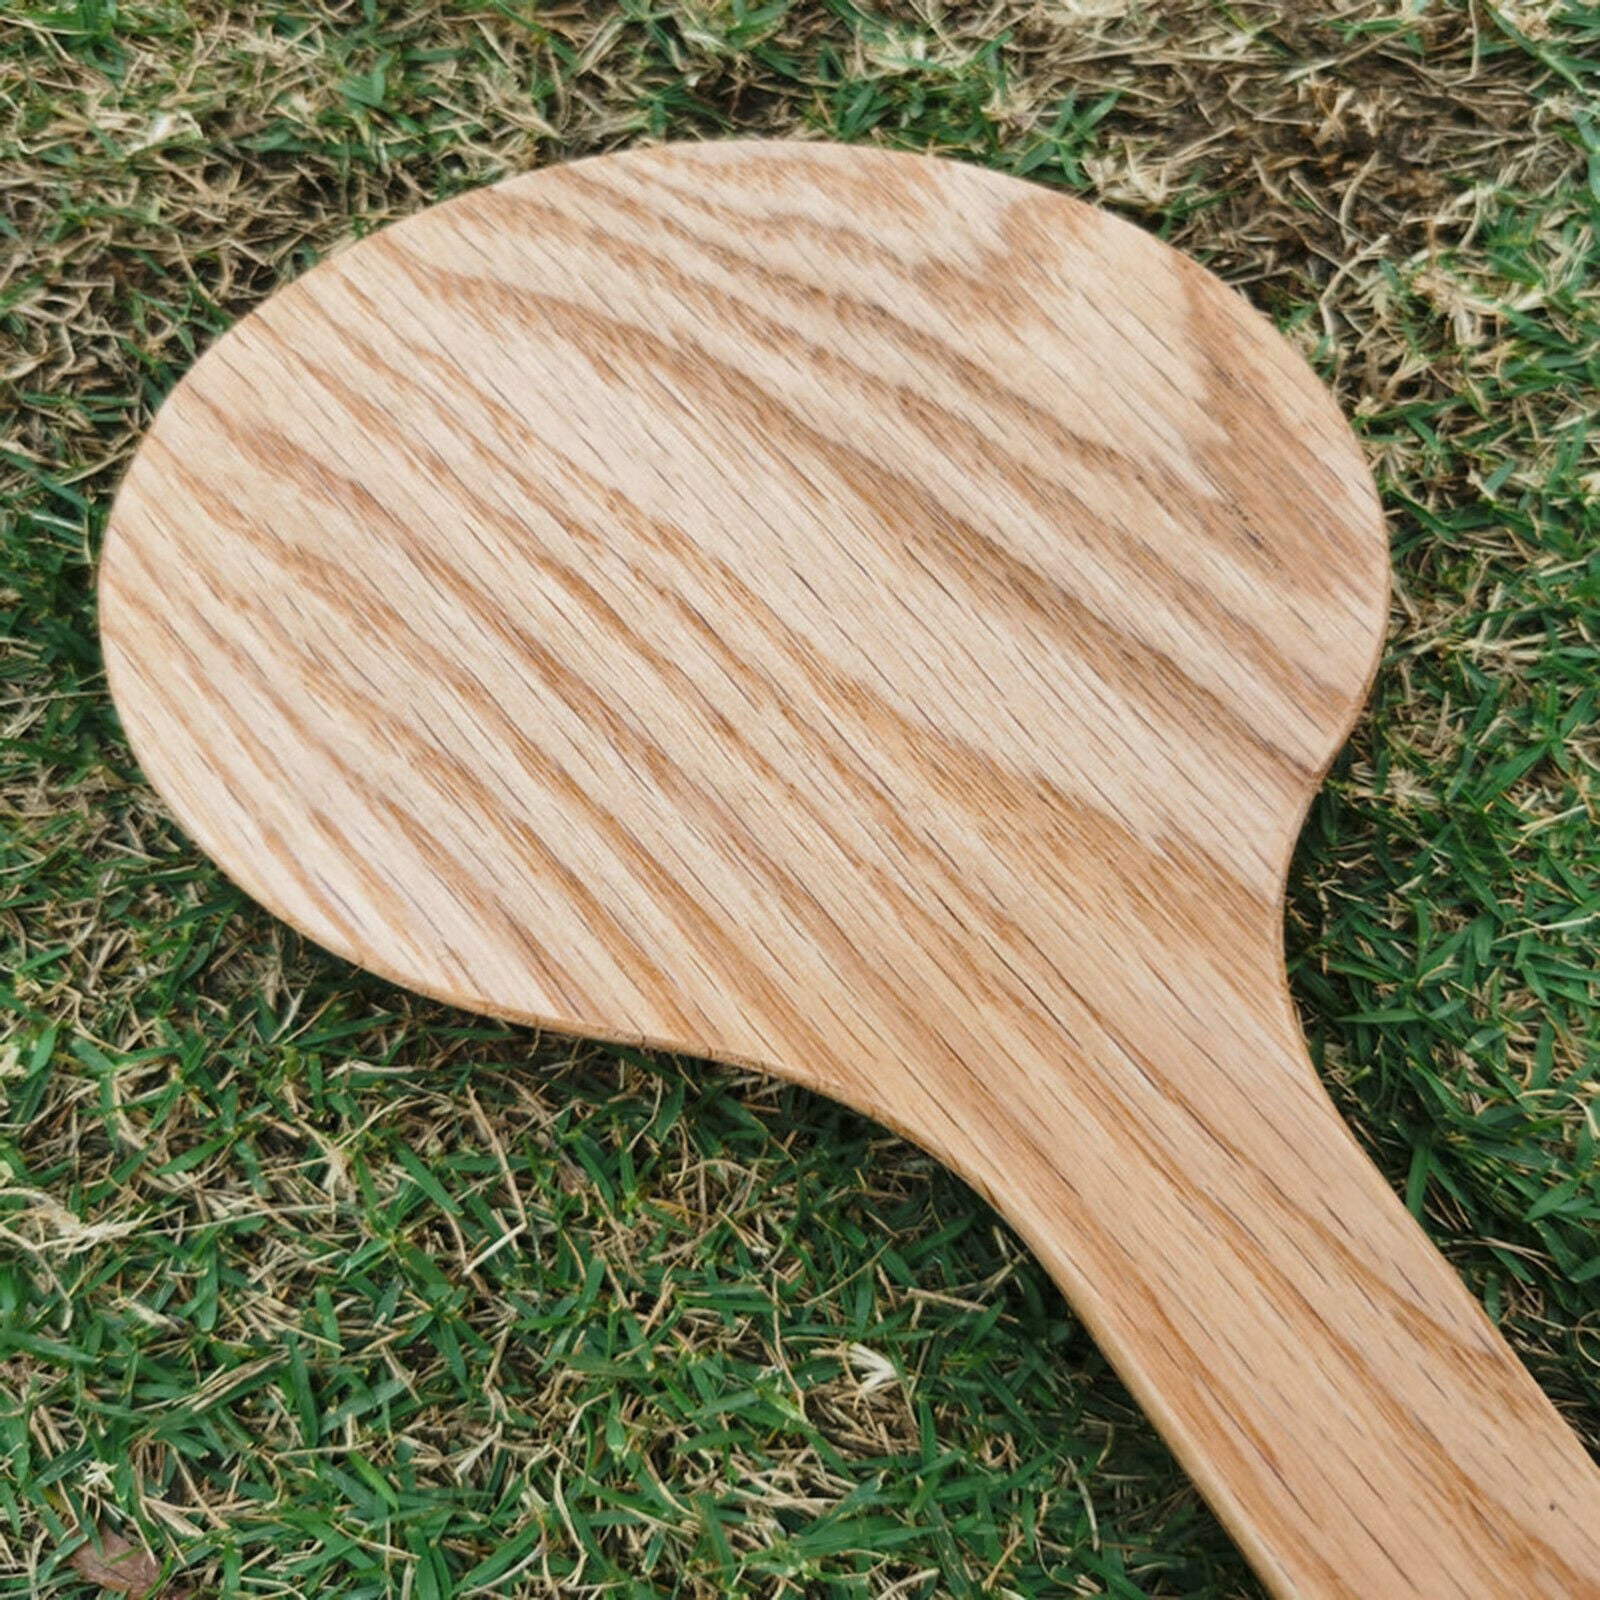 Wooden Tennis Tennis Pointer Tennis Racket Spoon for Master